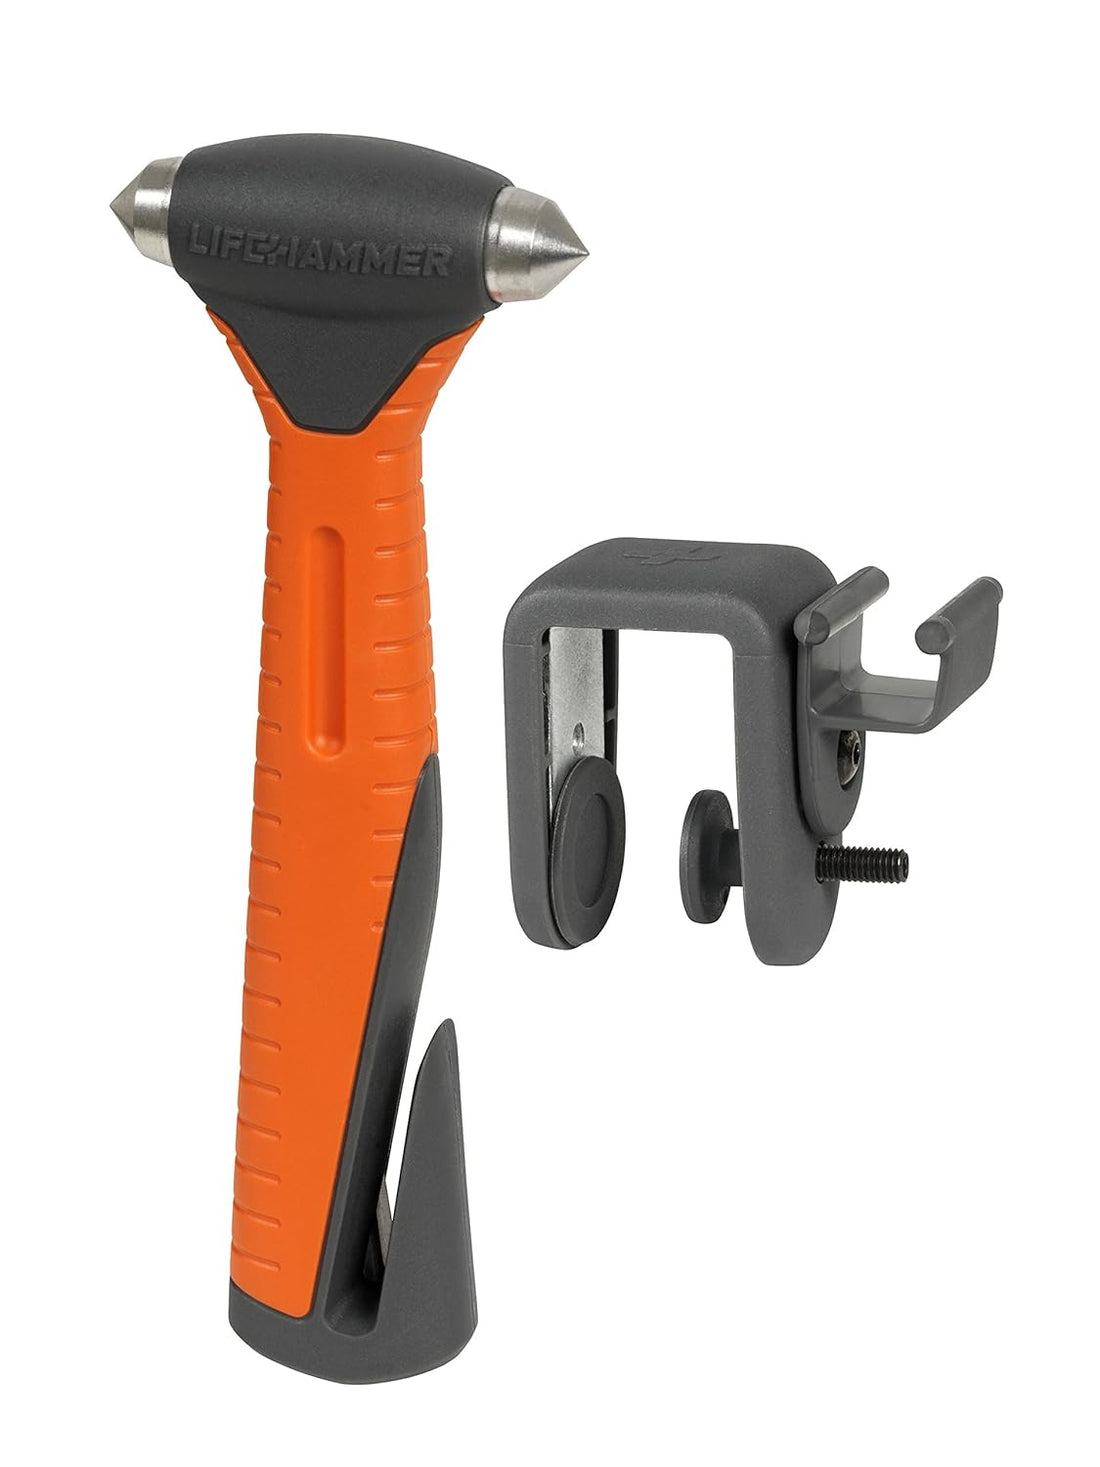 LifeHammer Safety Hammer Plus Emergency Auto Escape Tool (Orange)